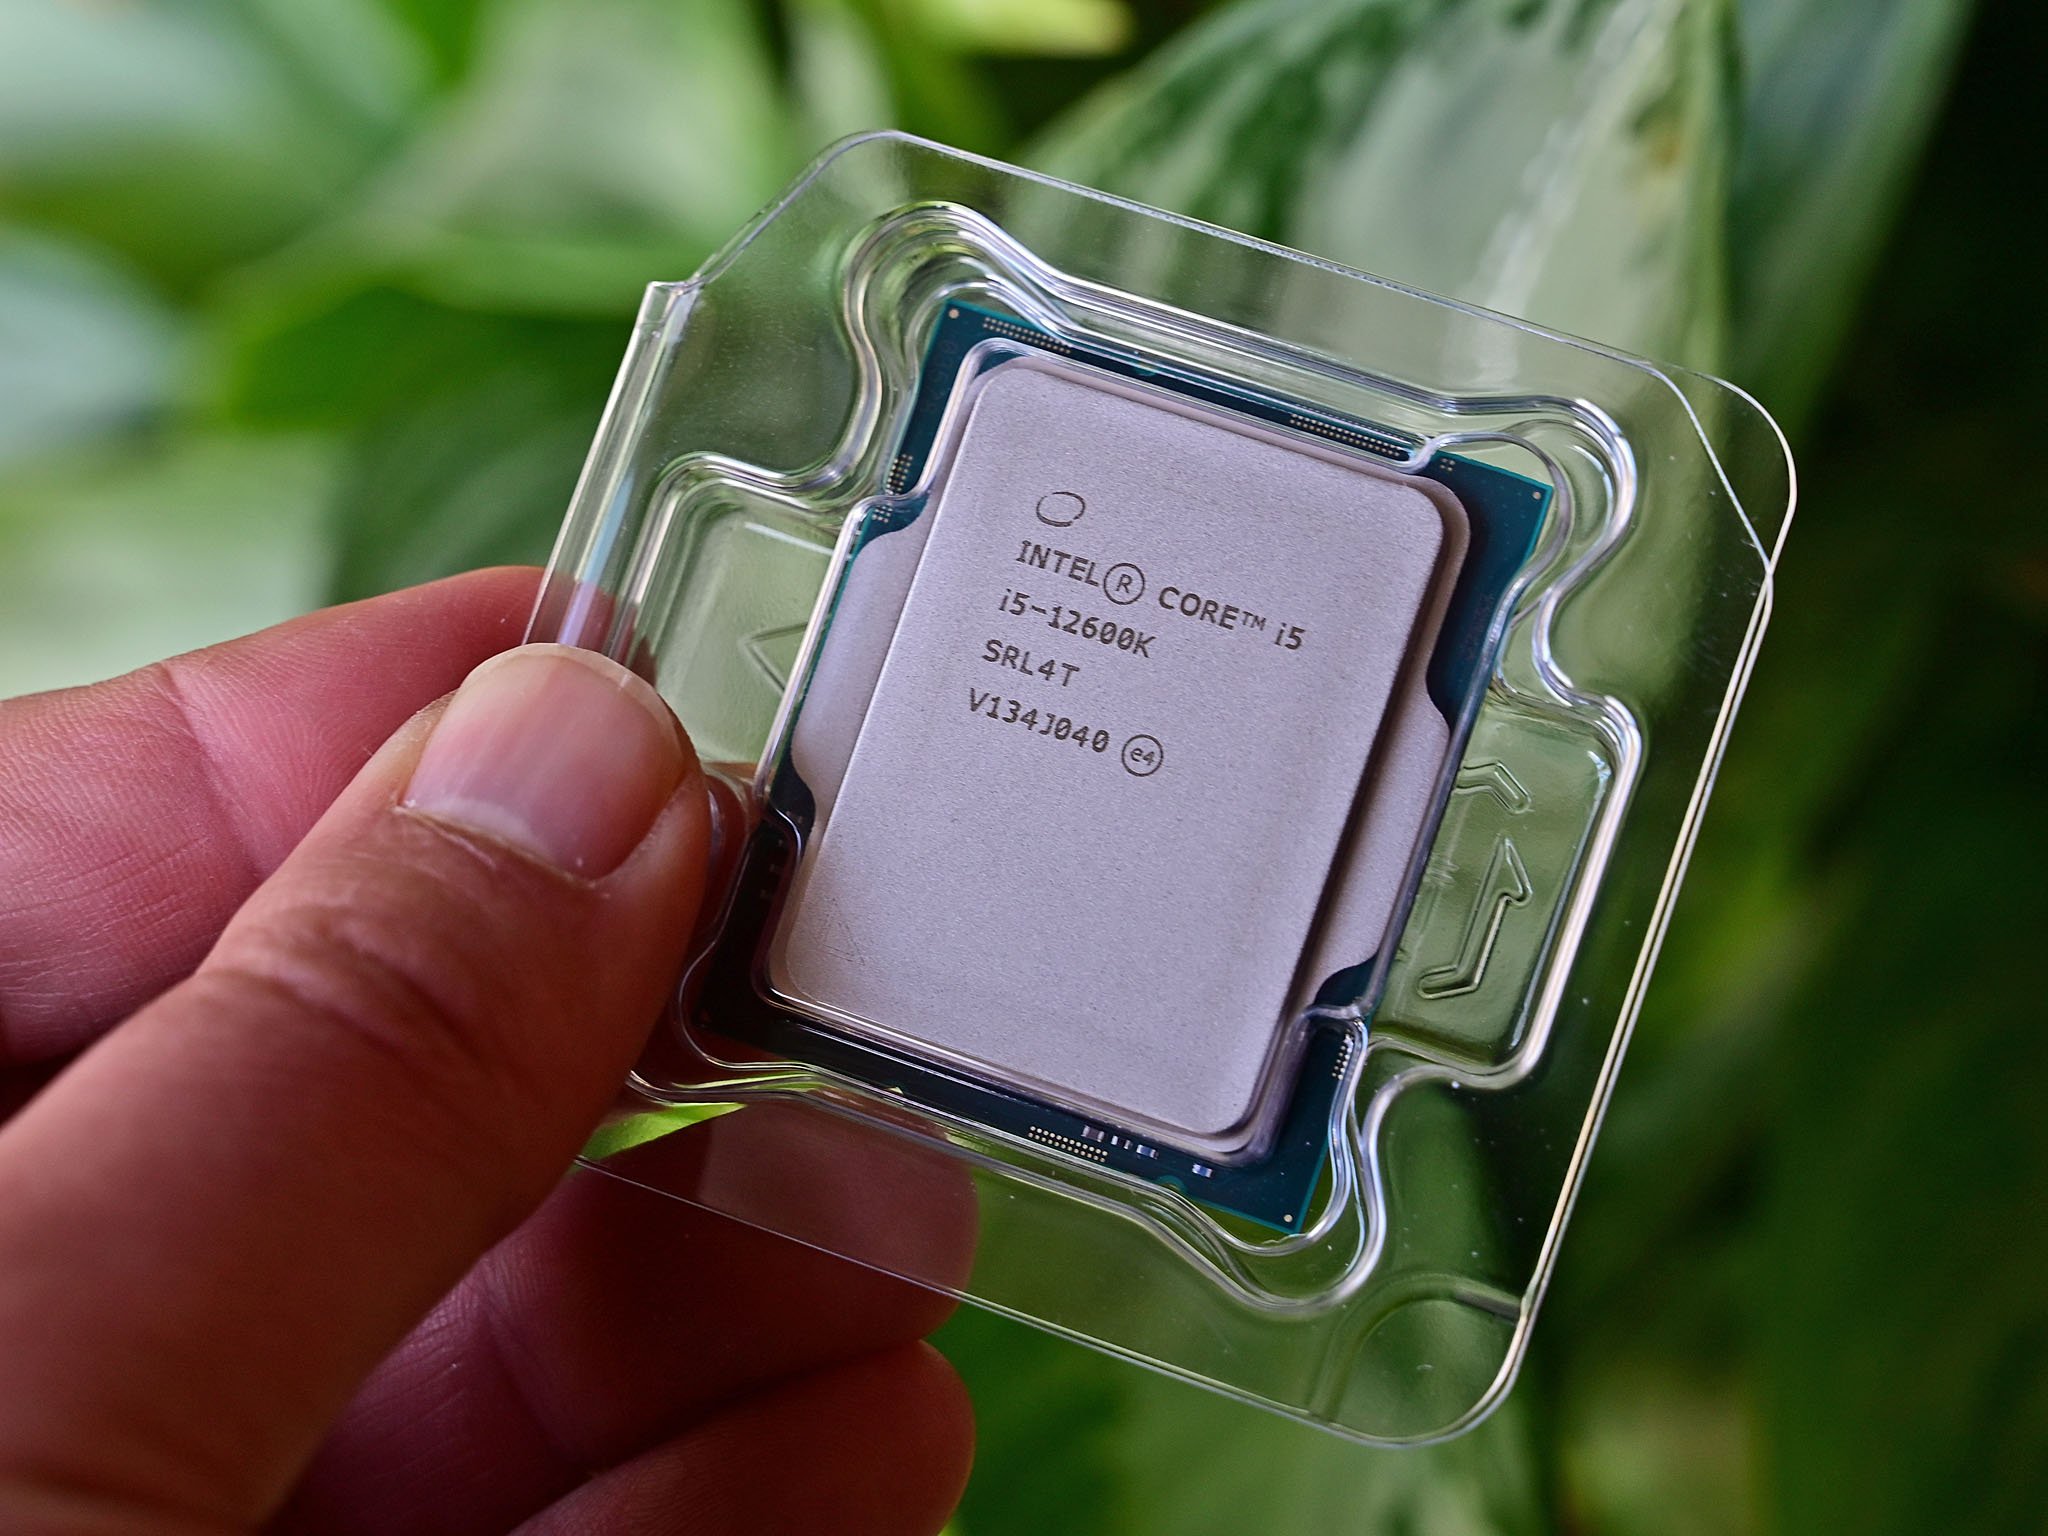 12th Generation Intel Corei5 chip